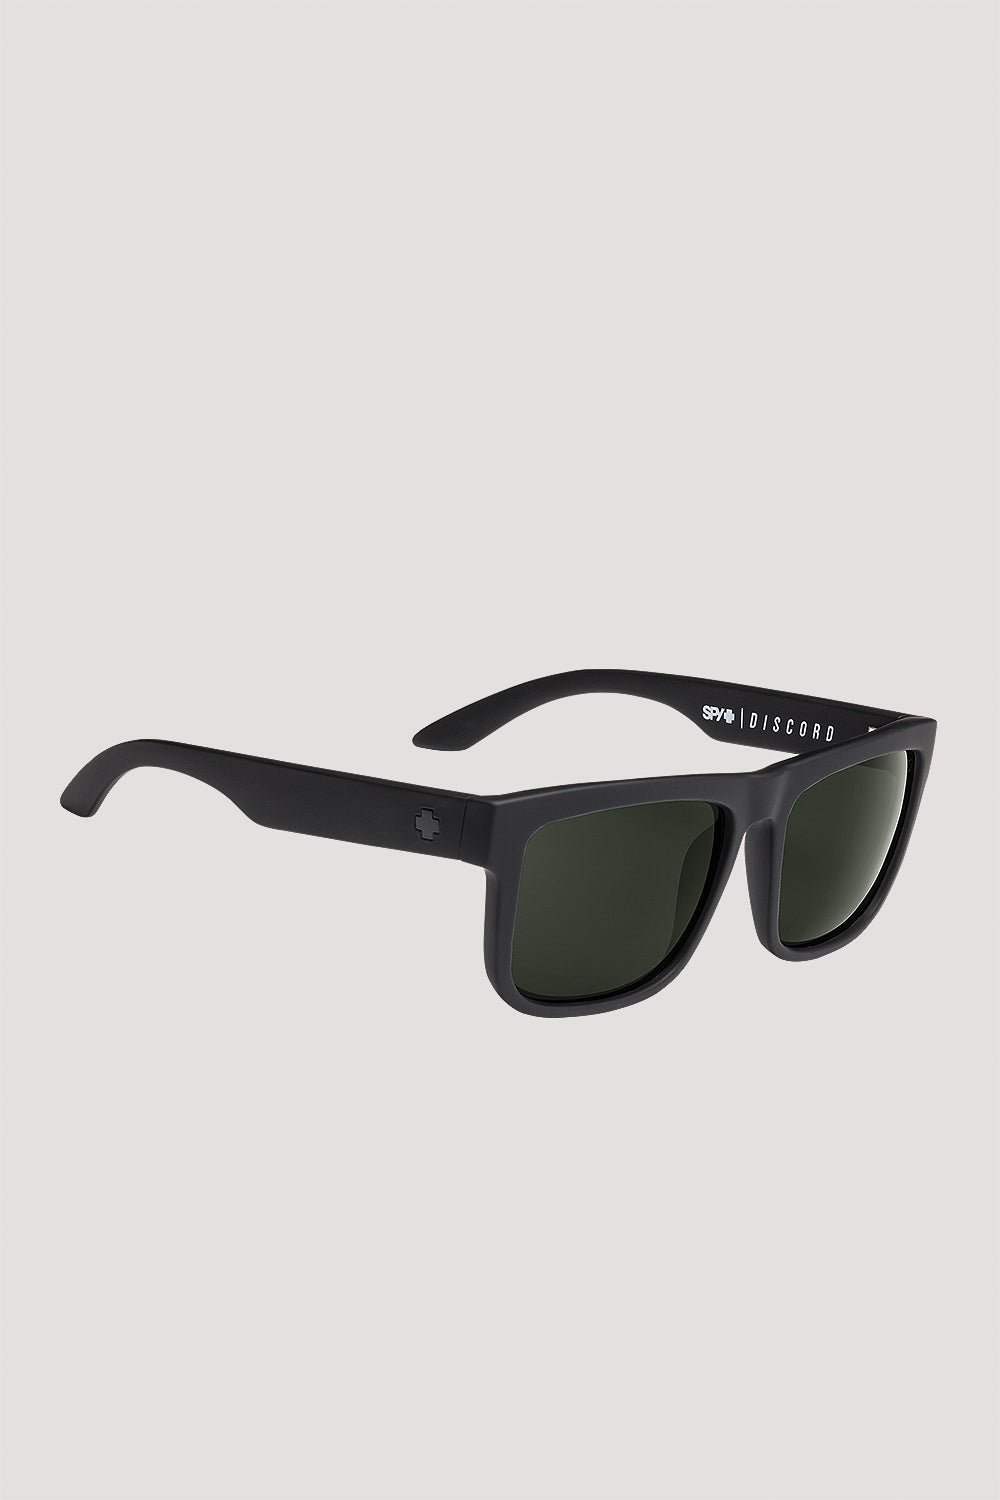 Spy Discord Sunglasses - Matte Black / KAB / Pink Spectra